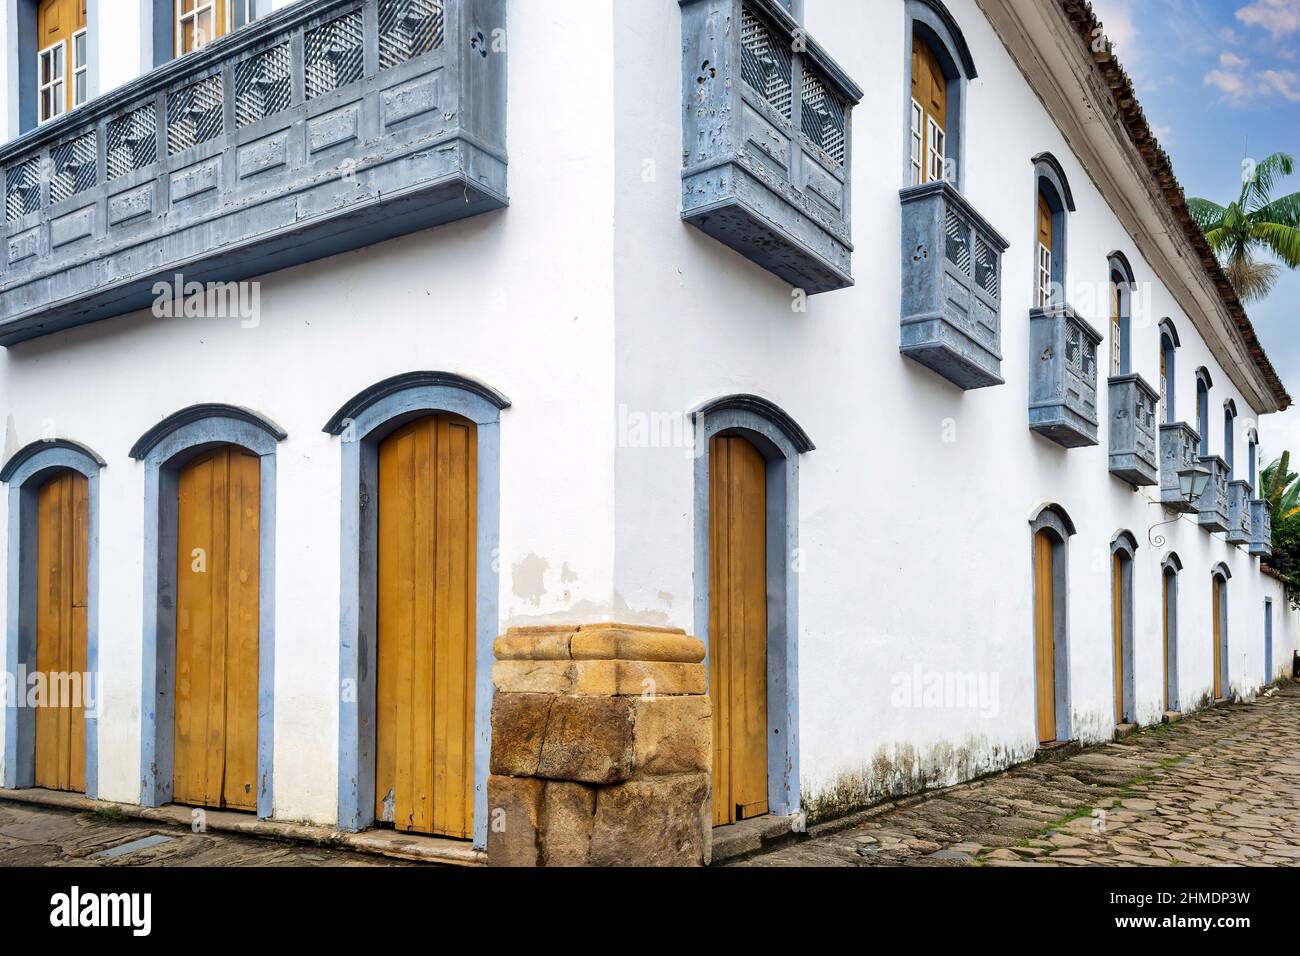 Architettura coloniale portoghese a Paraty, Brasile Foto Stock